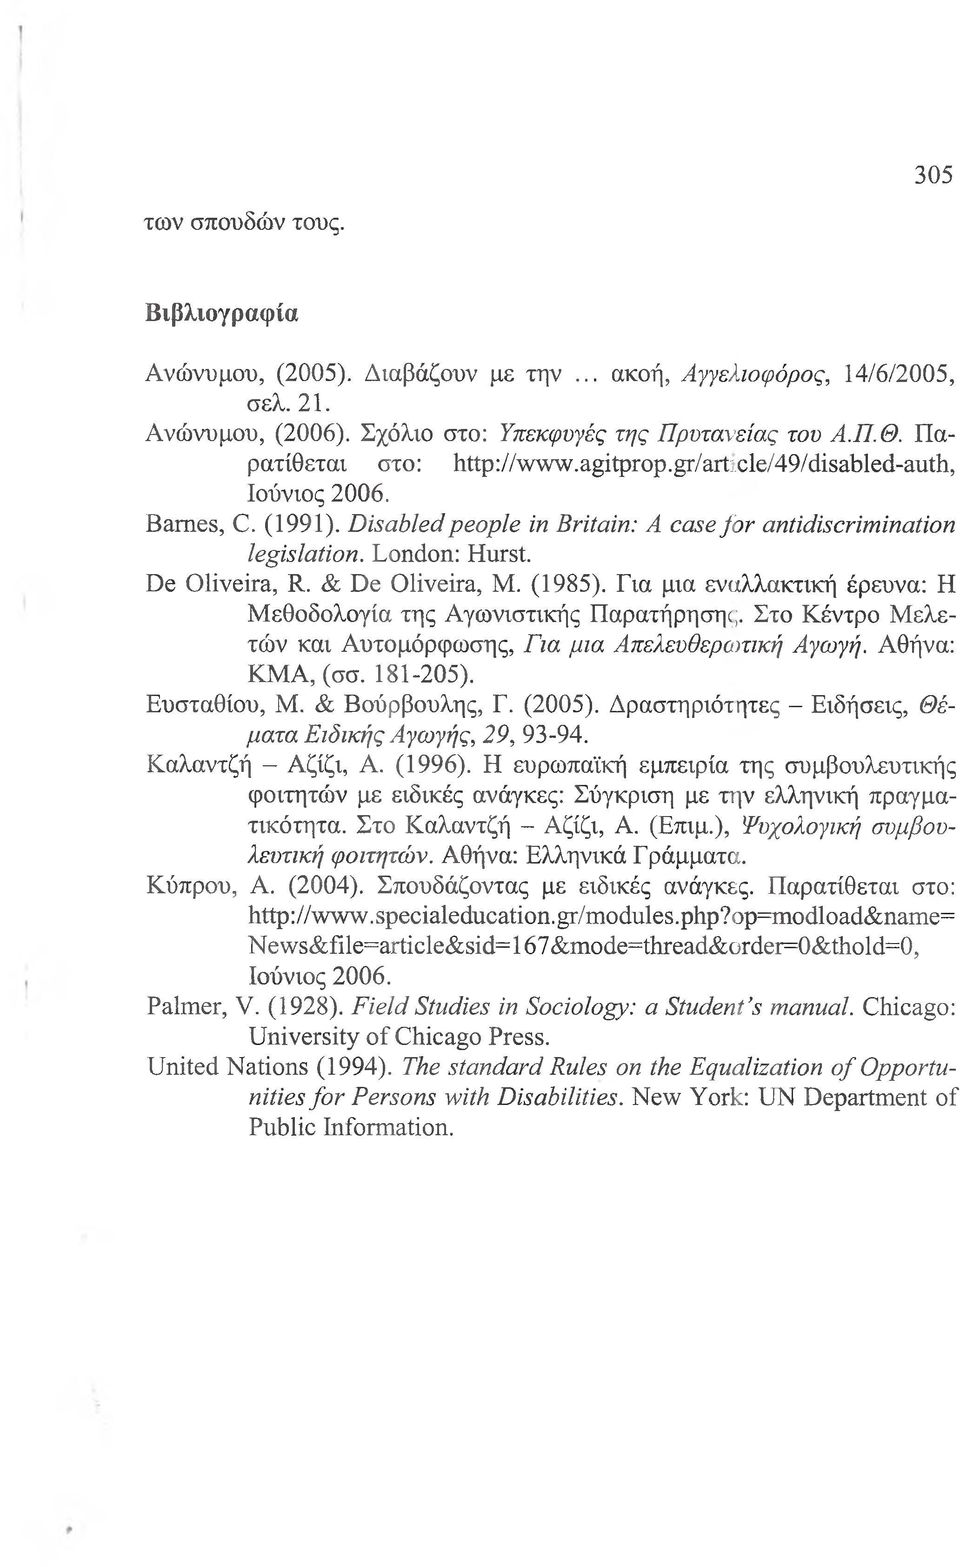 & De Oliveira, M. (1985). Για μια εναλλακτική έρευνα: Η Μεθοδολογία της Αγωνιστικής Παρατήρησης. Στο Κέντρο Μελετών και Αυτομόρφωσης, Για μια Απελευθερωτική Αγωγή. Αθήνα: ΚΜΑ, (σσ. 181-205).